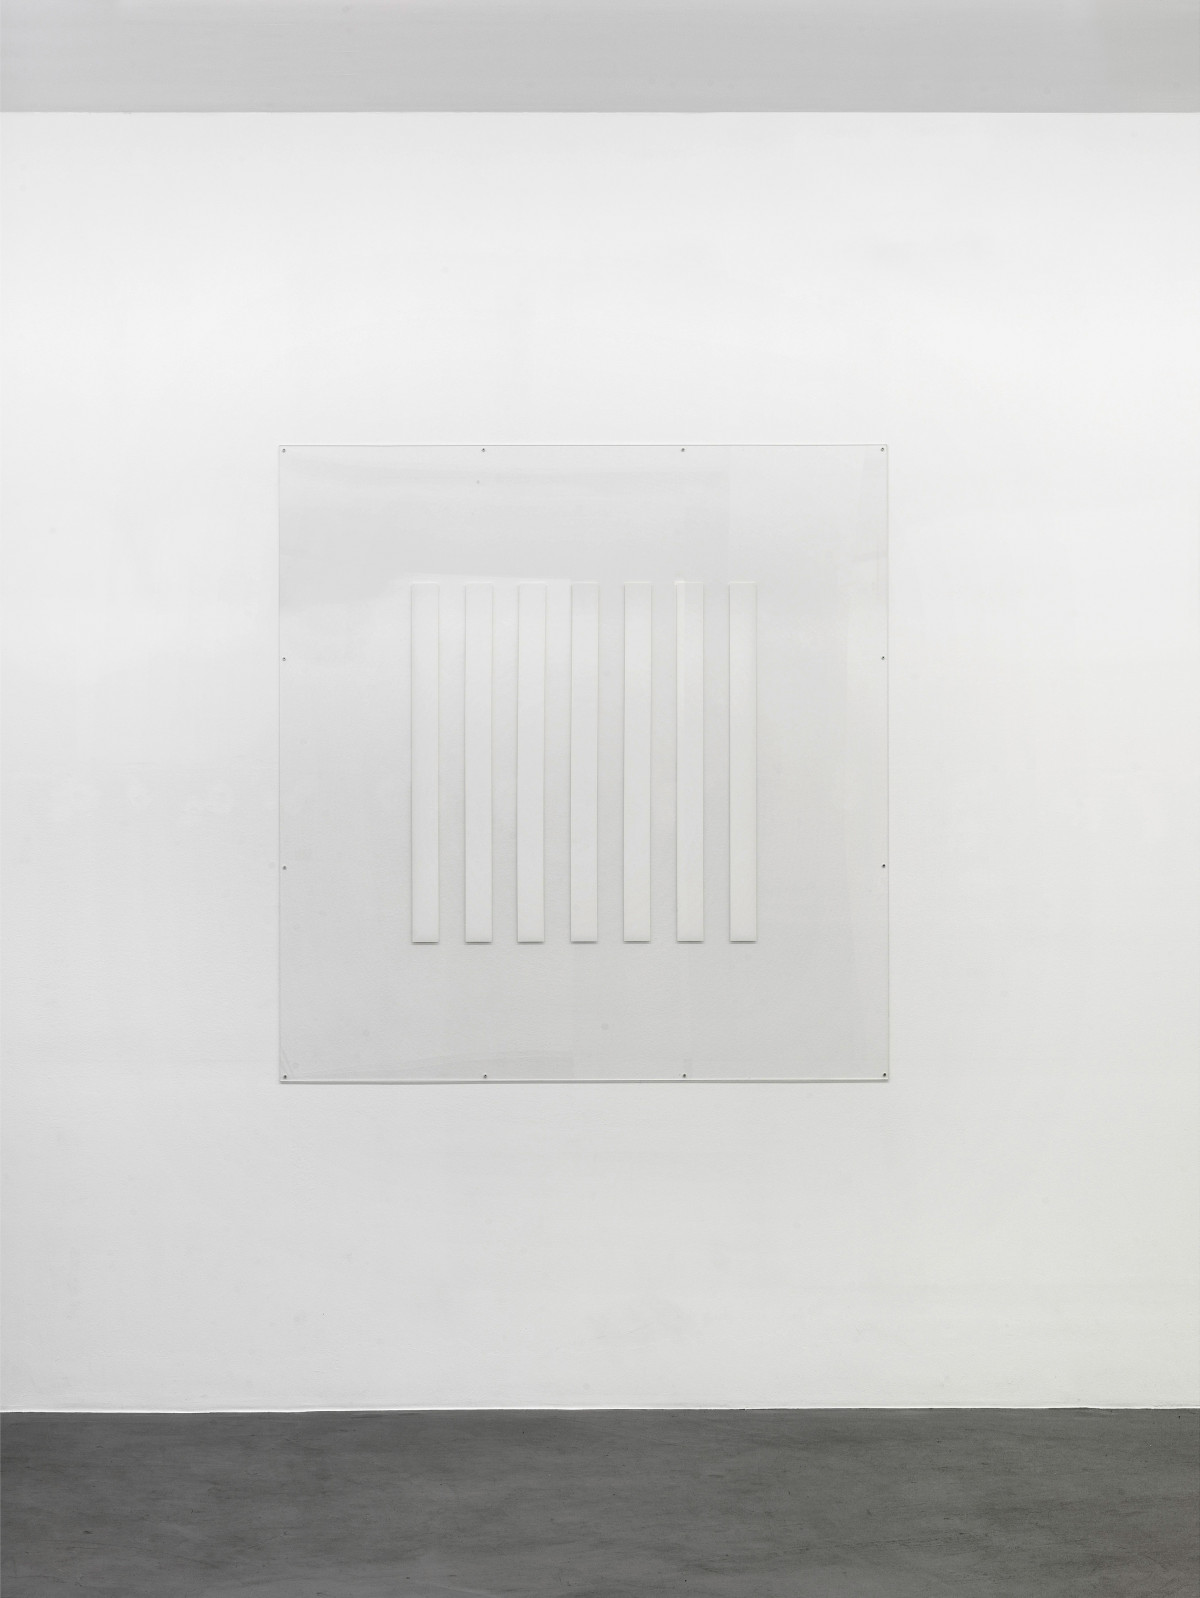 Daniel Buren, ‘Sans titre’, 1991, White vinyl, transparent perspex on white wall